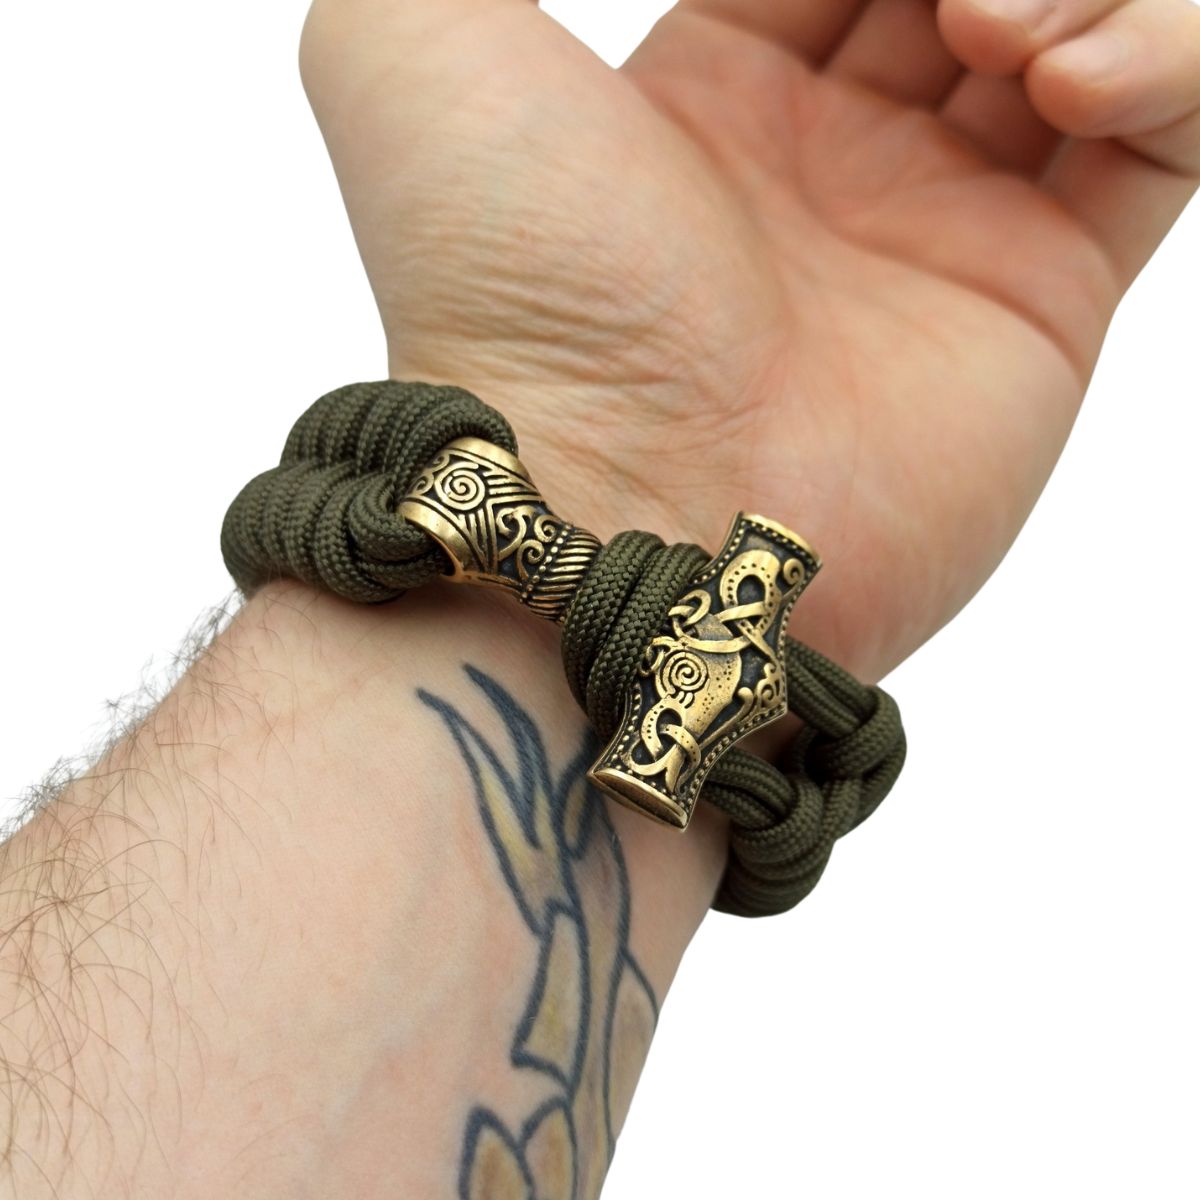 Mjolnir replica paracord bracelet